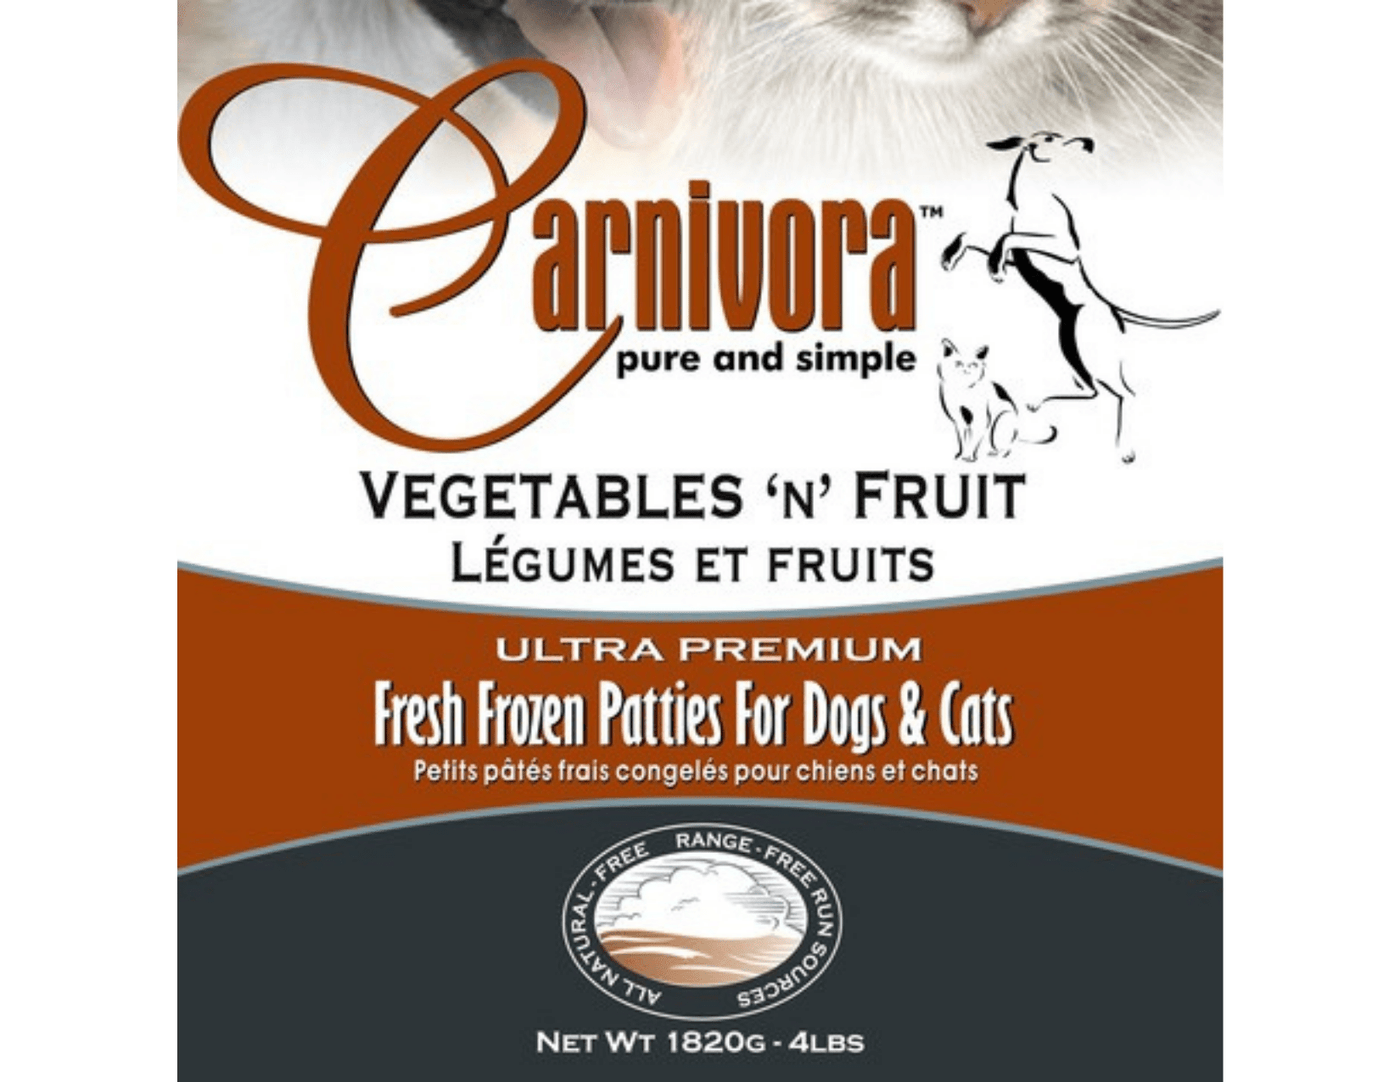 Carnivora Vegetable and Fruit - PetToba-Carnivora